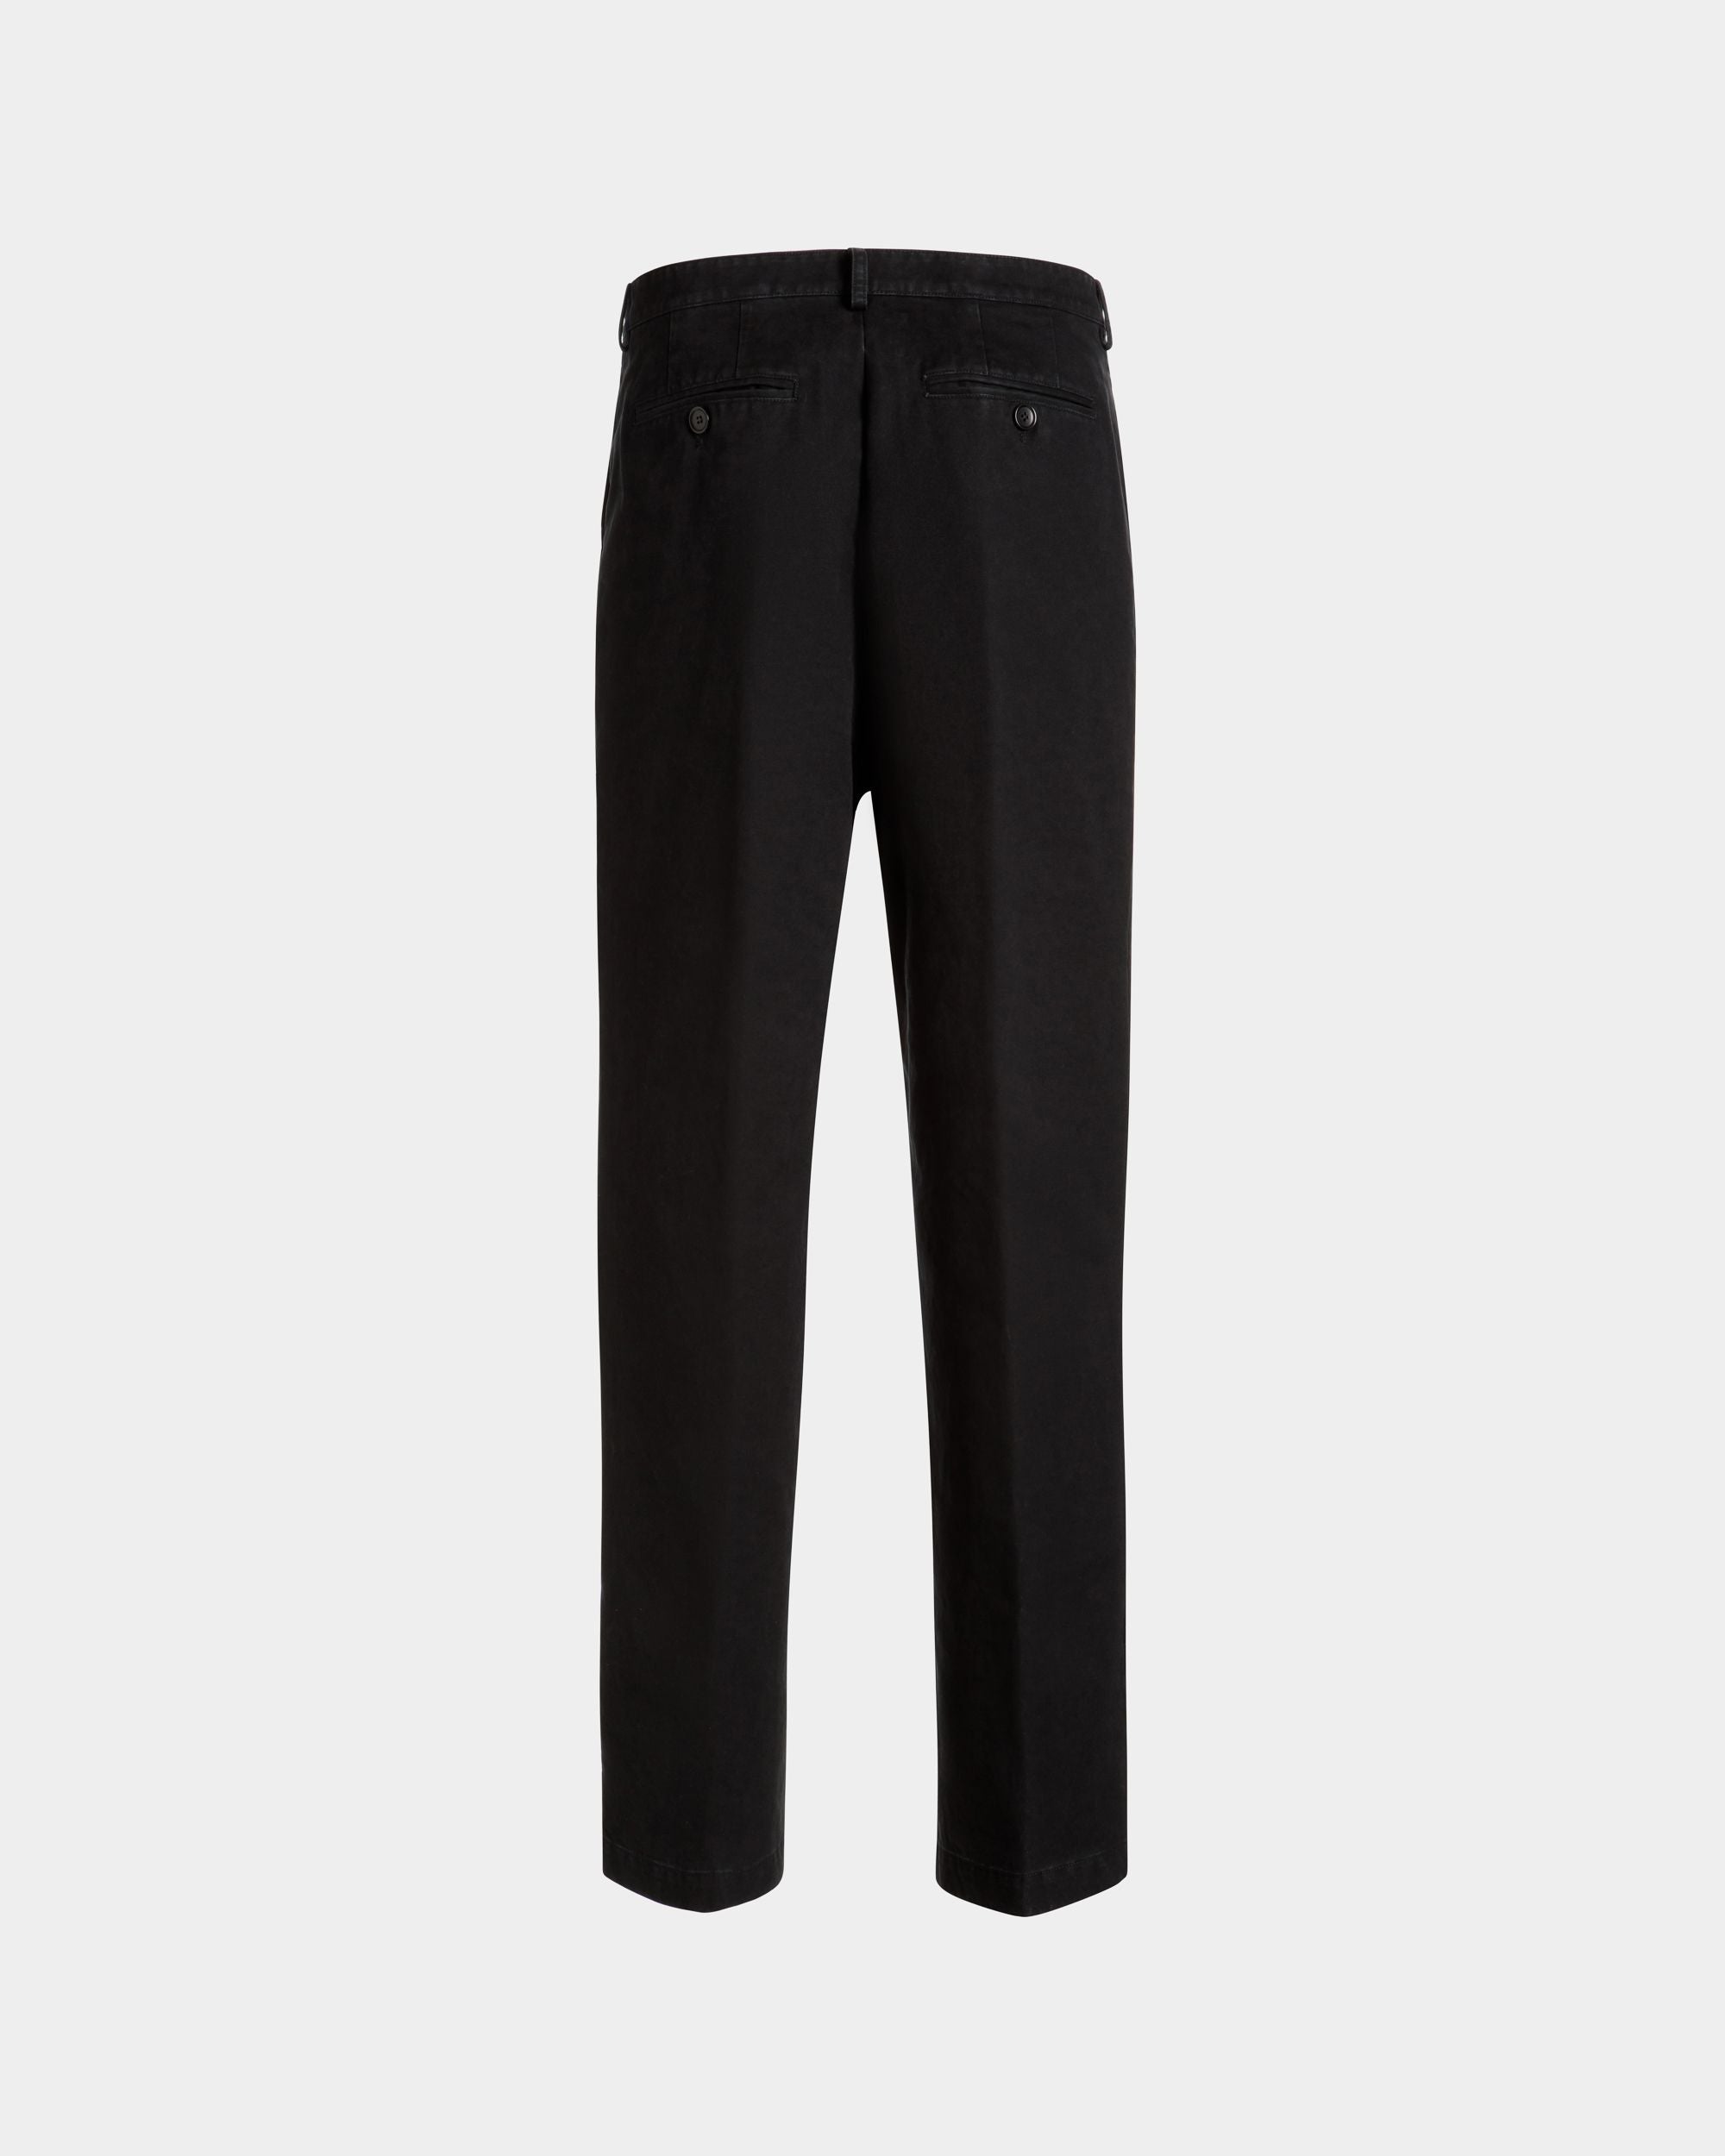 Men's Pants in Black Cotton | Bally | Still Life Back